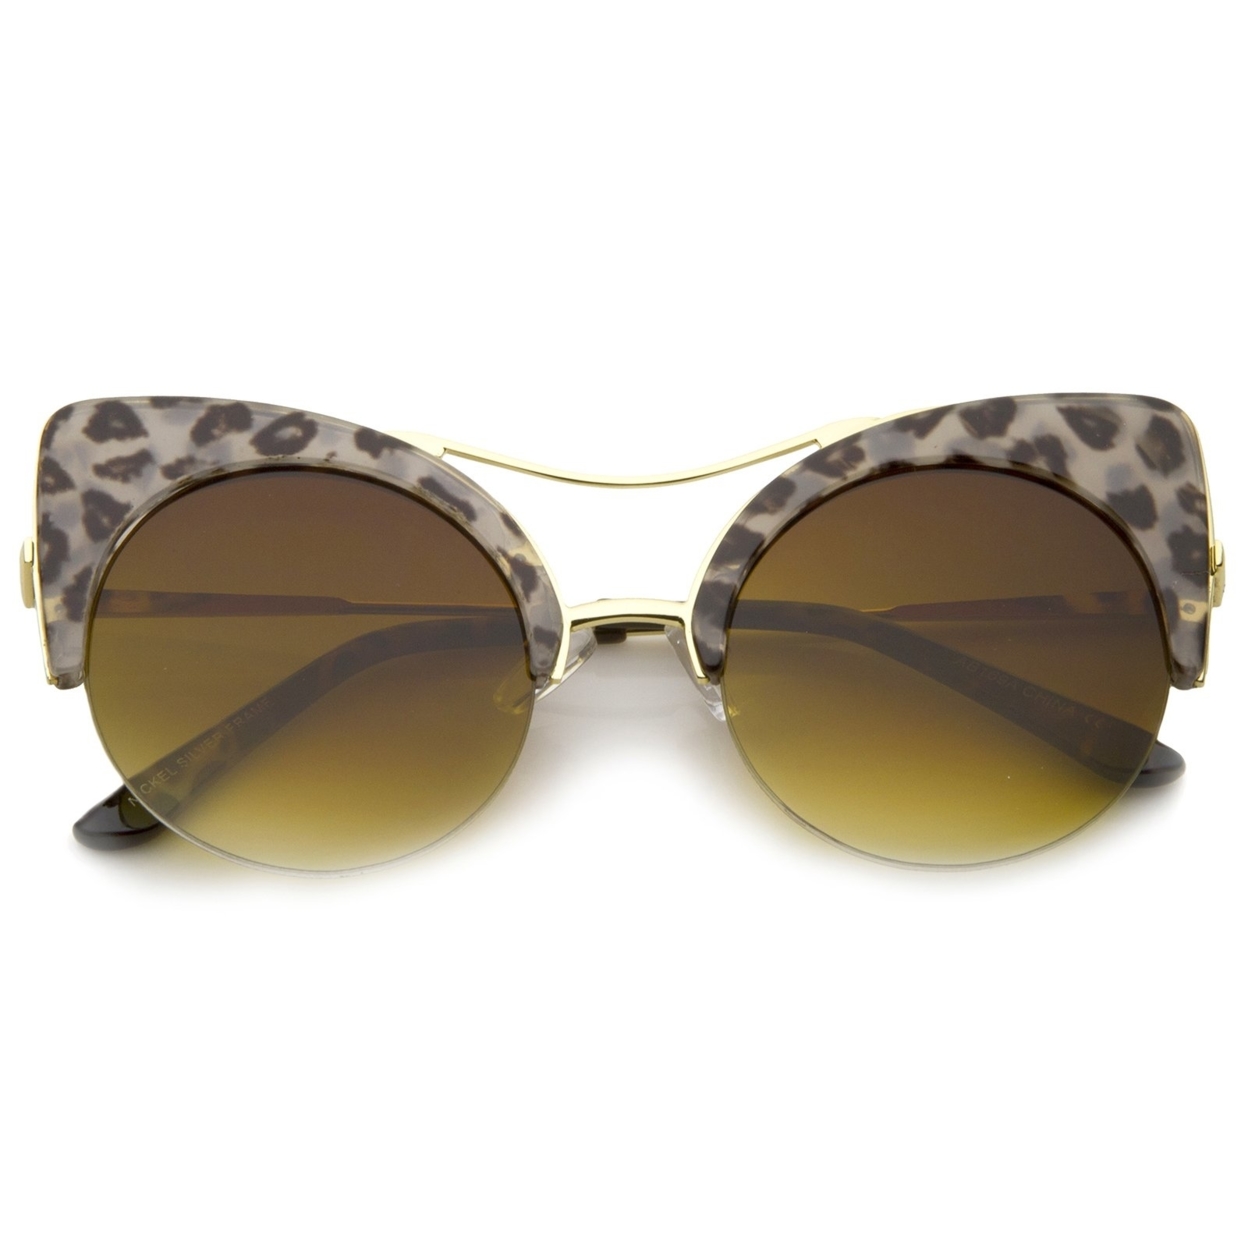 Women's Half-frame High Pointed Flat Lens Round Cat Eye Sunglasses 51mm - Black / Lavender